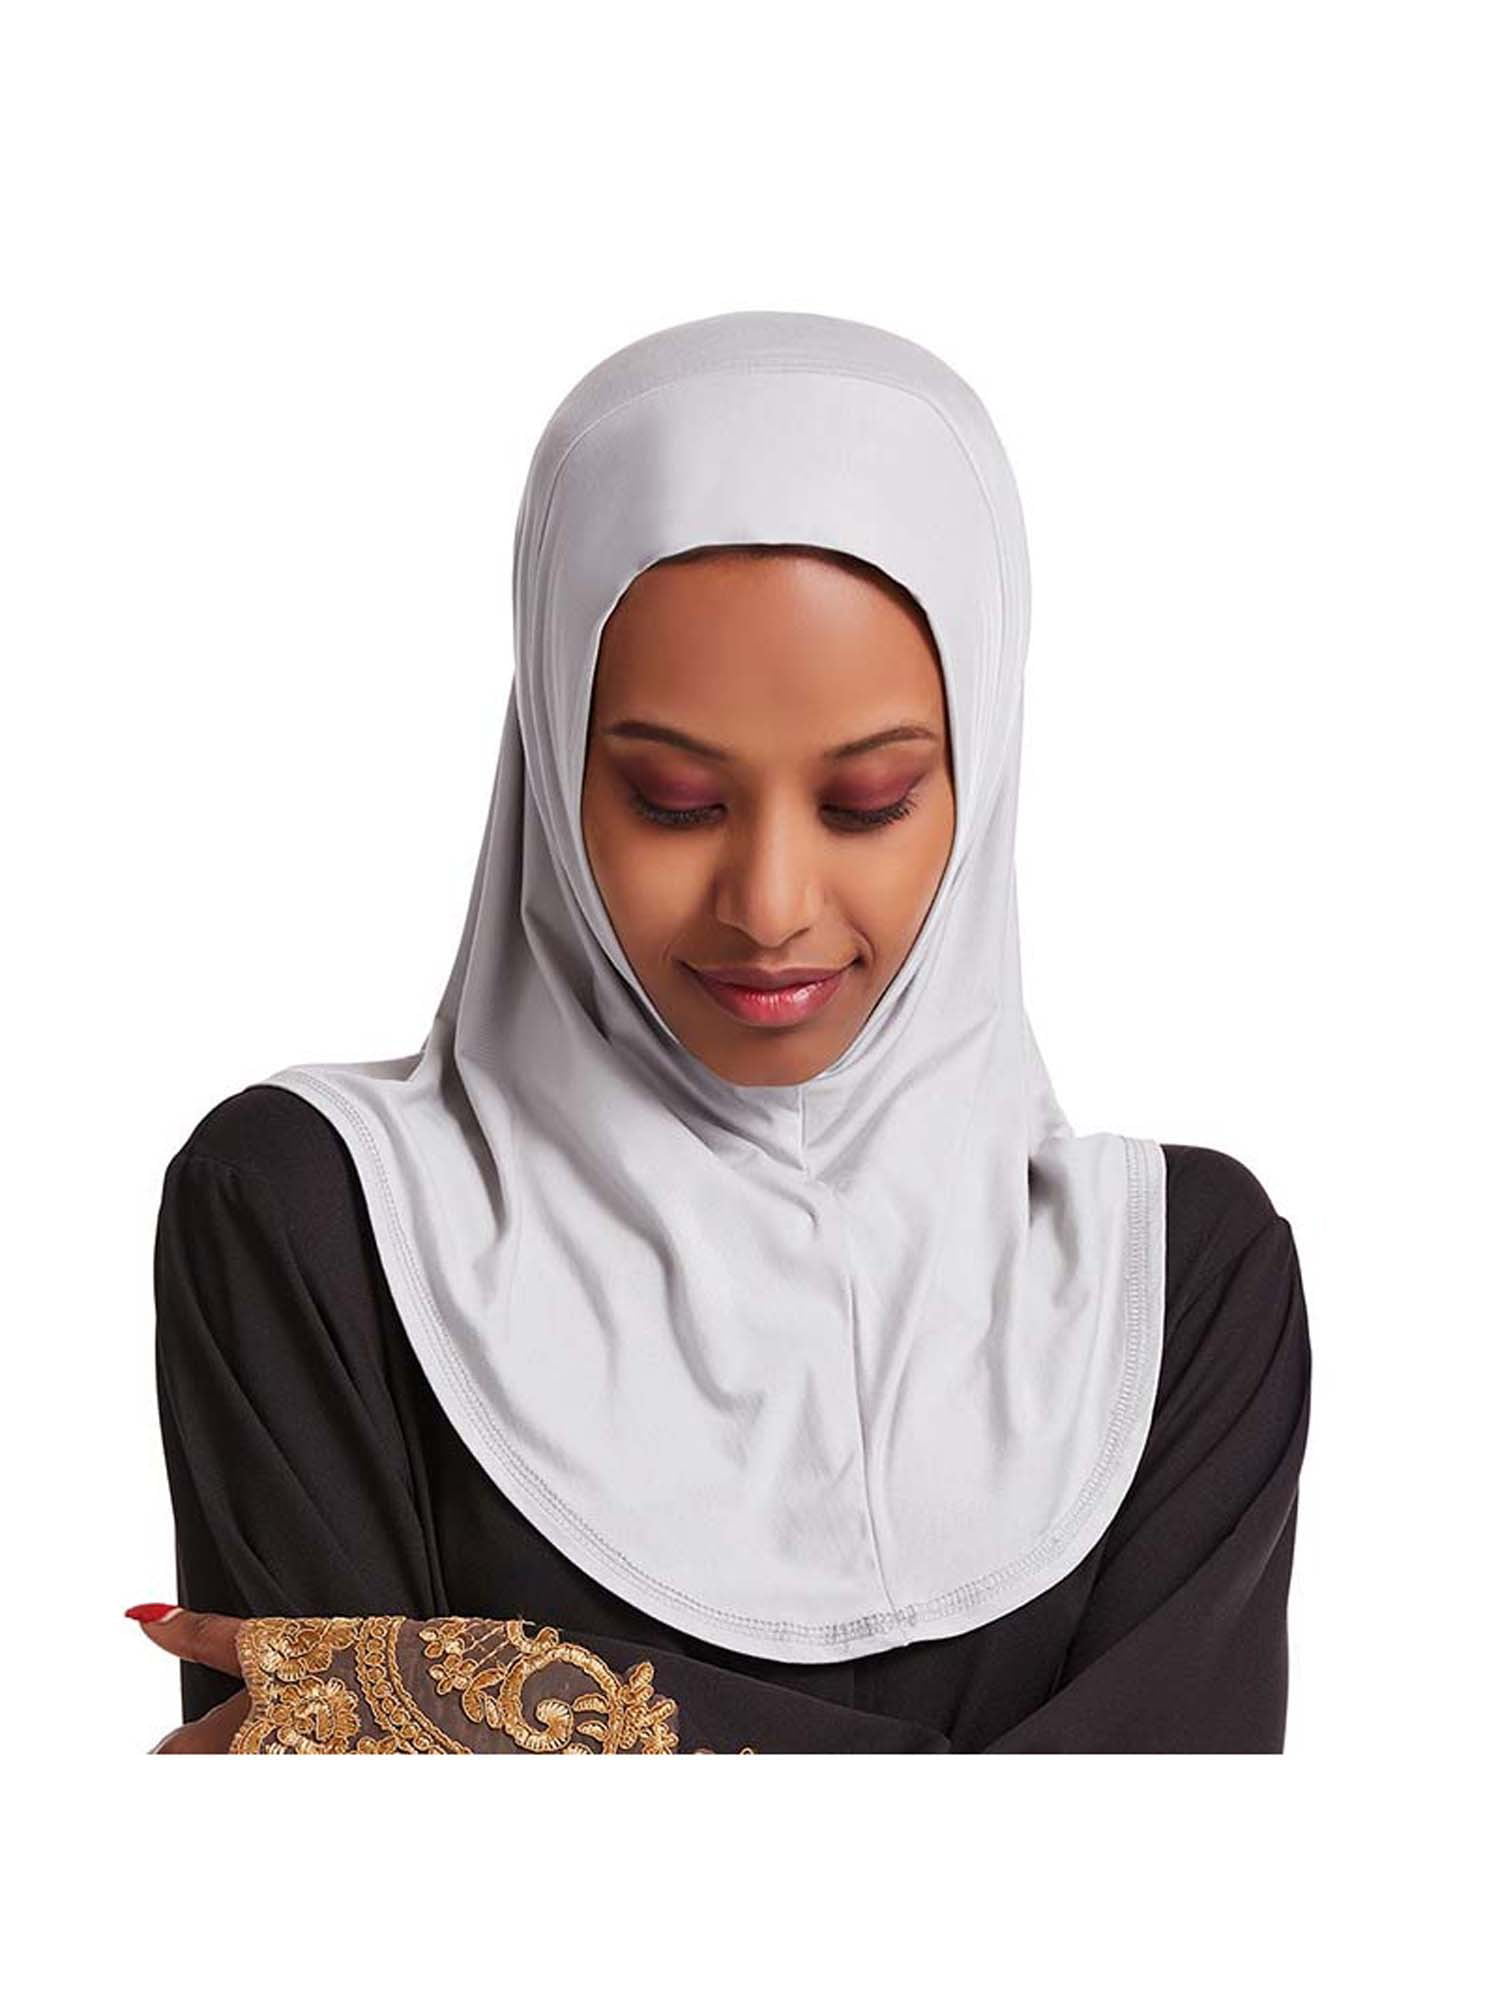 Details about   Muslim Women Long Scarf Hijab Full Cover Islamic Head Wrap Shawl One Piece Amira 